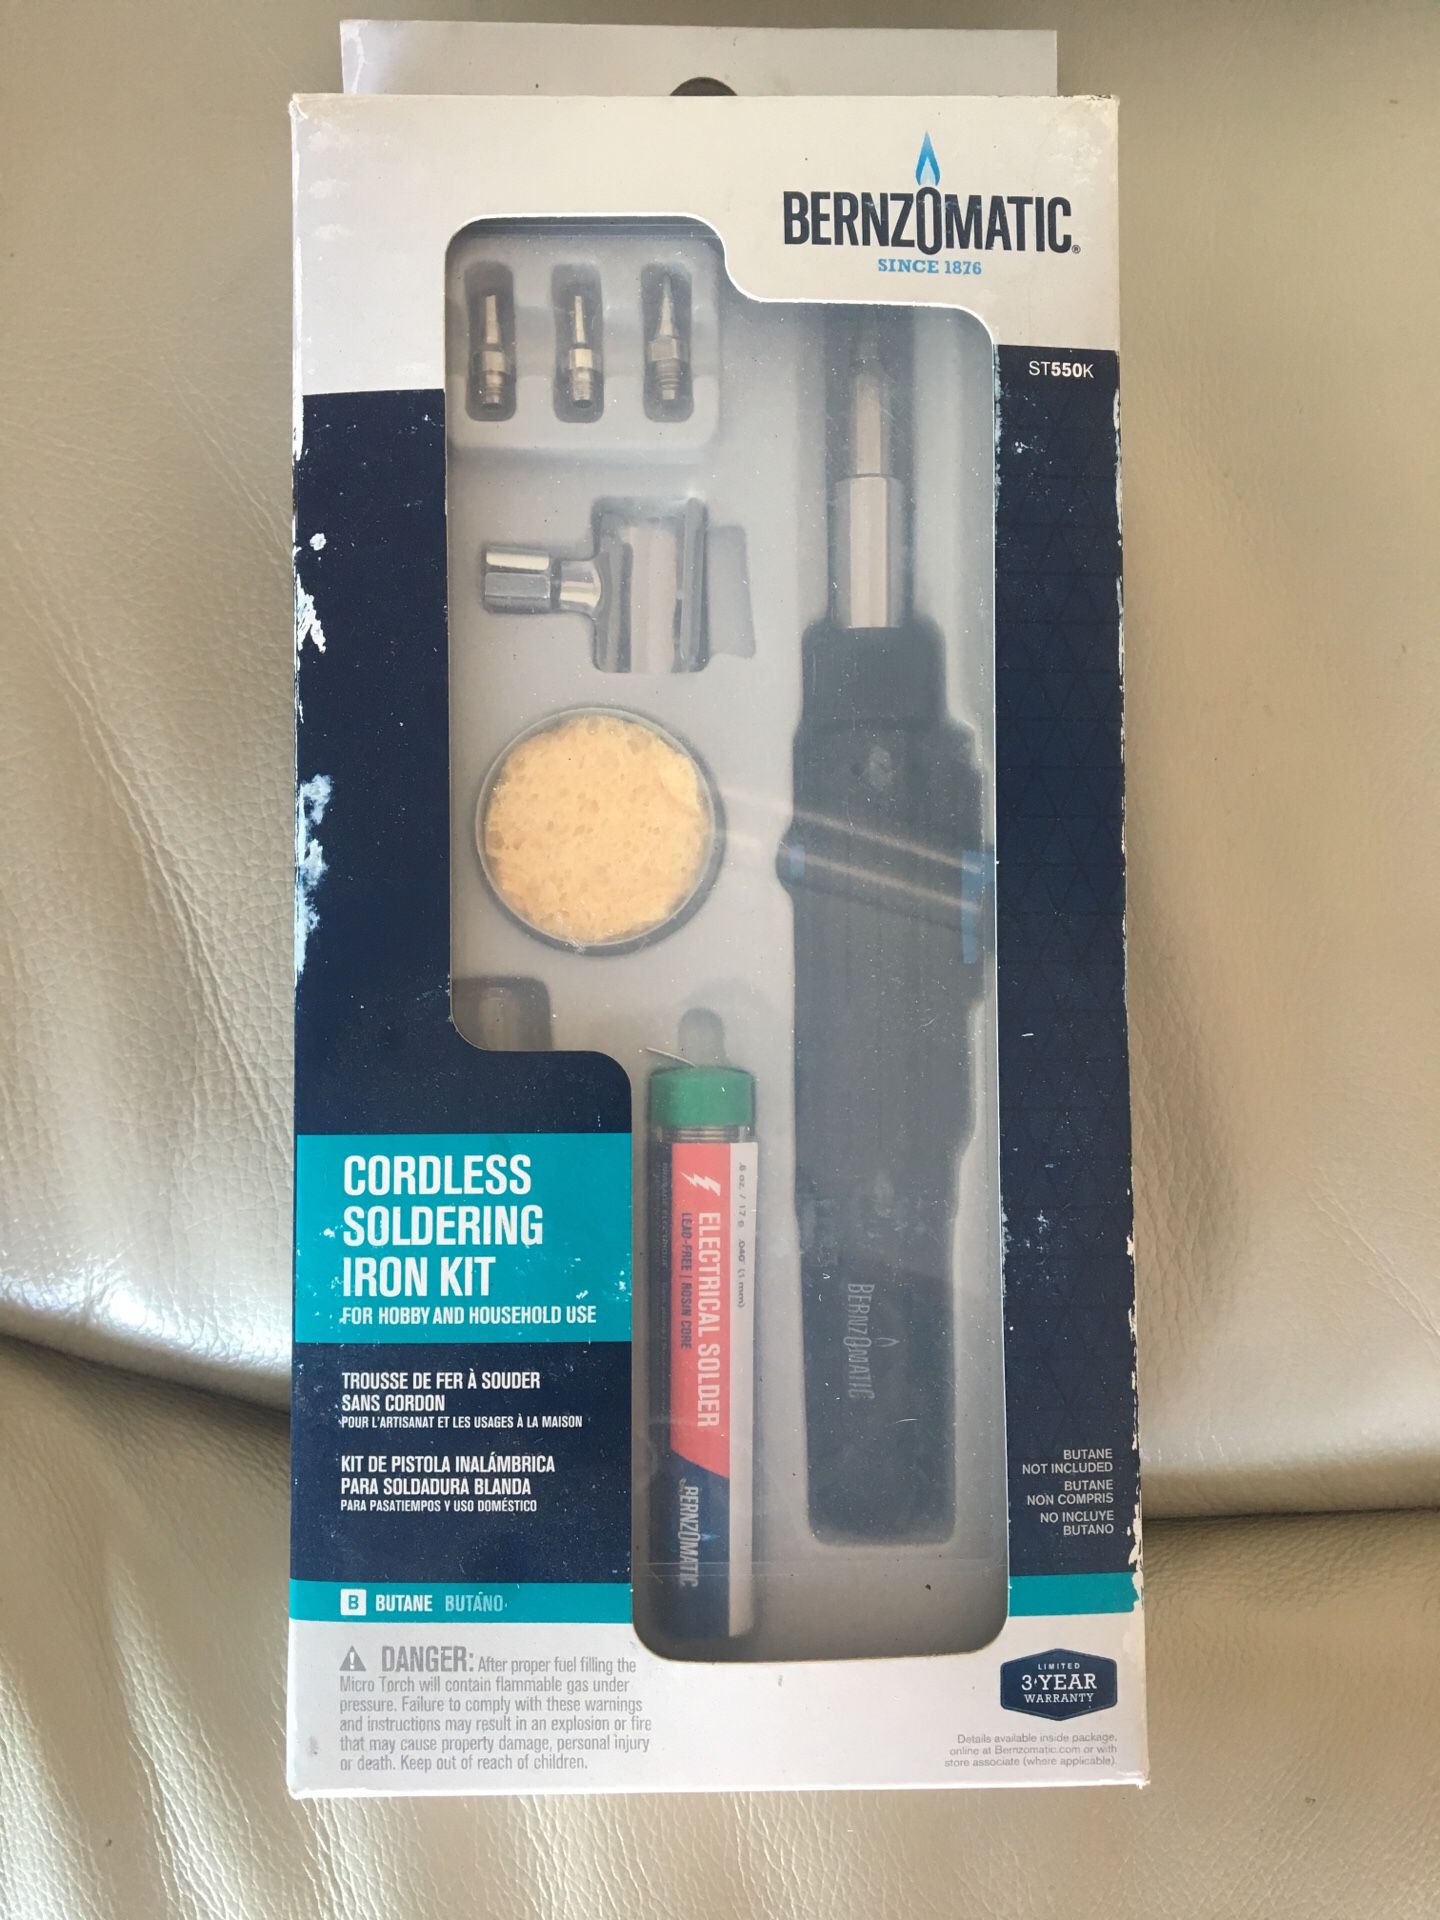 Cordless soldering iron kit